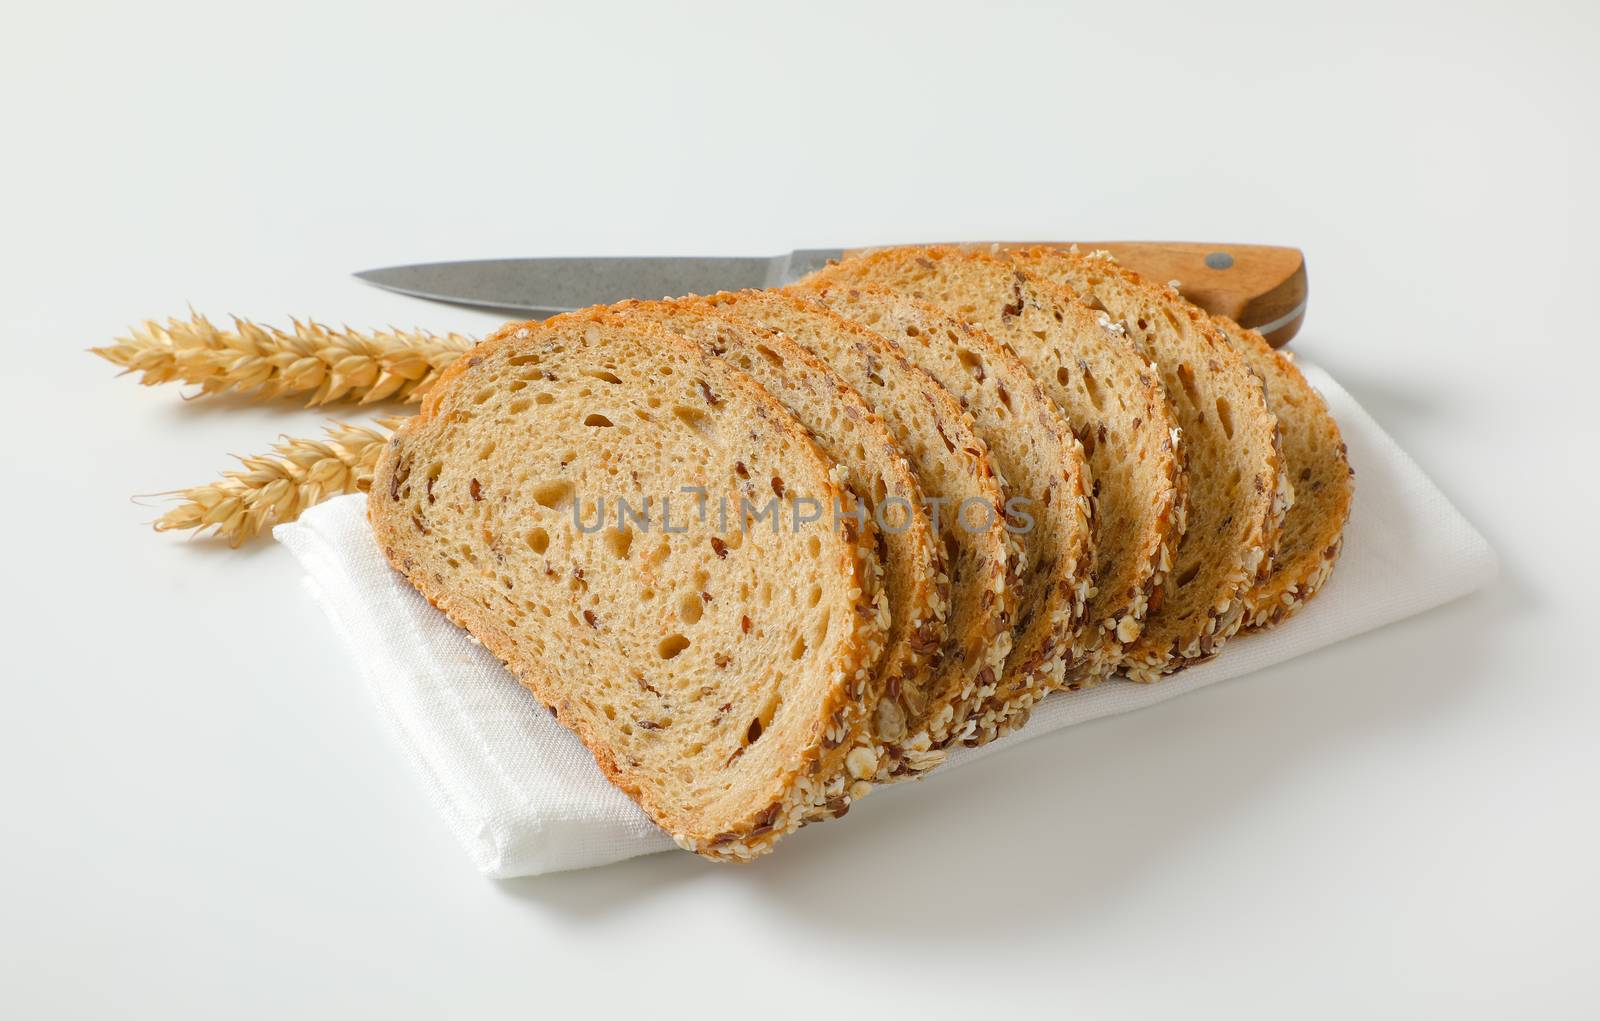 Sliced loaf of whole grain bread by Digifoodstock